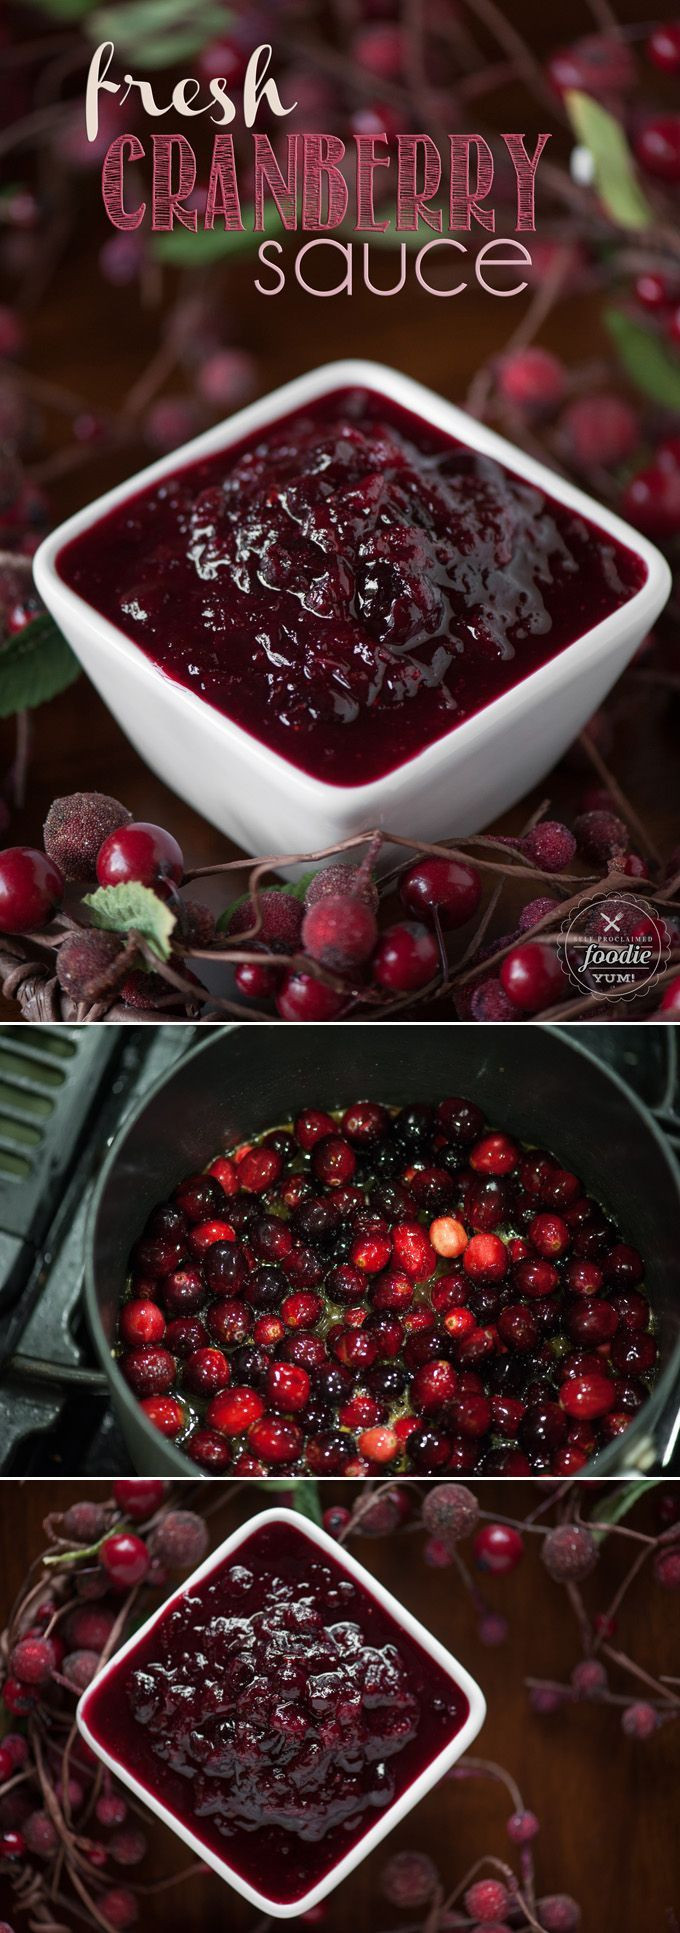 Thanksgiving Cranberry Recipes
 17 Best ideas about Cranberry Sauce on Pinterest